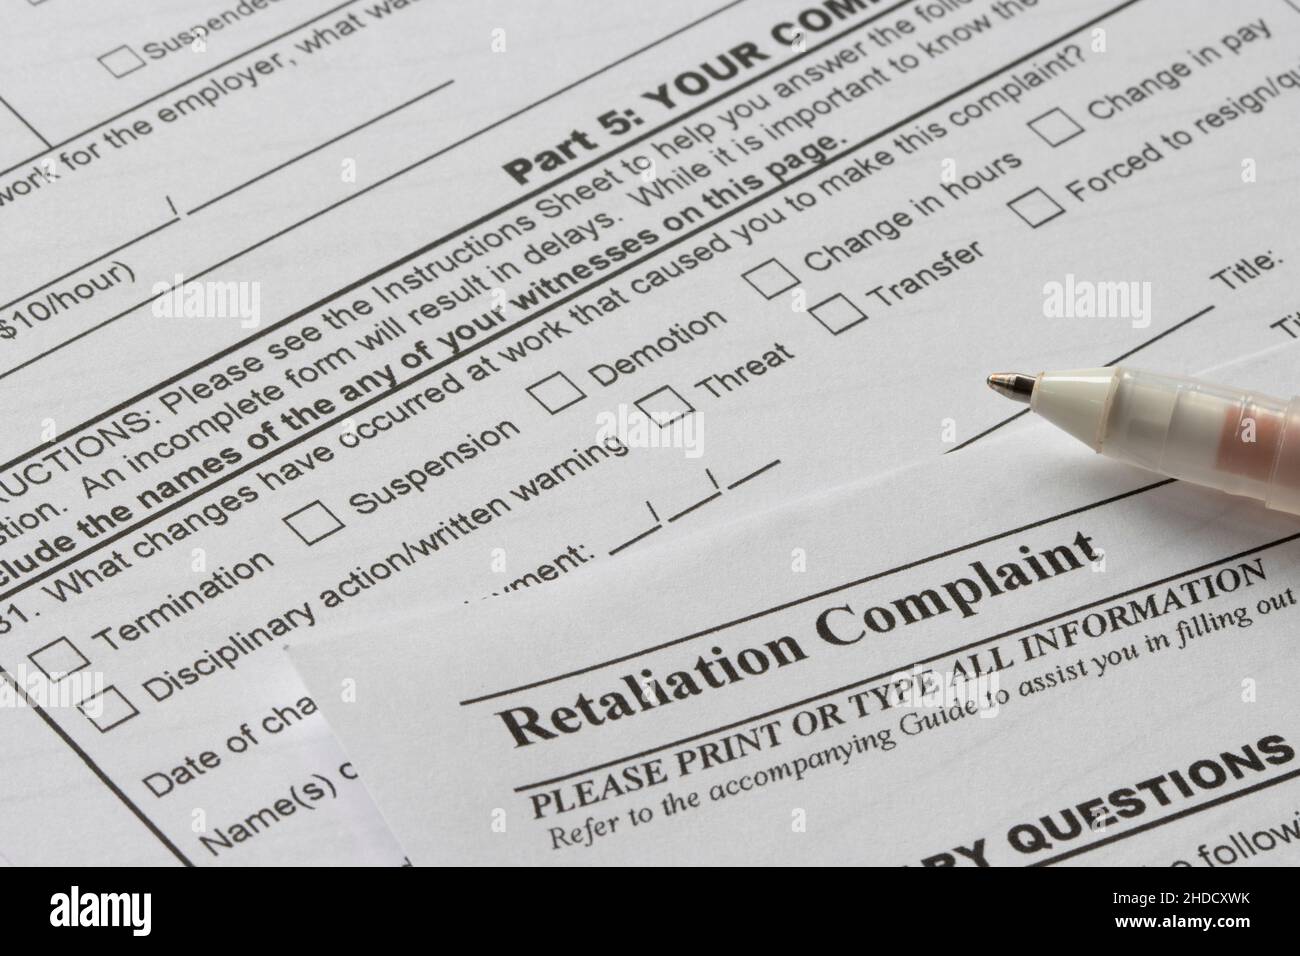 Closeup of a workplace retaliation complaint form. Stock Photo